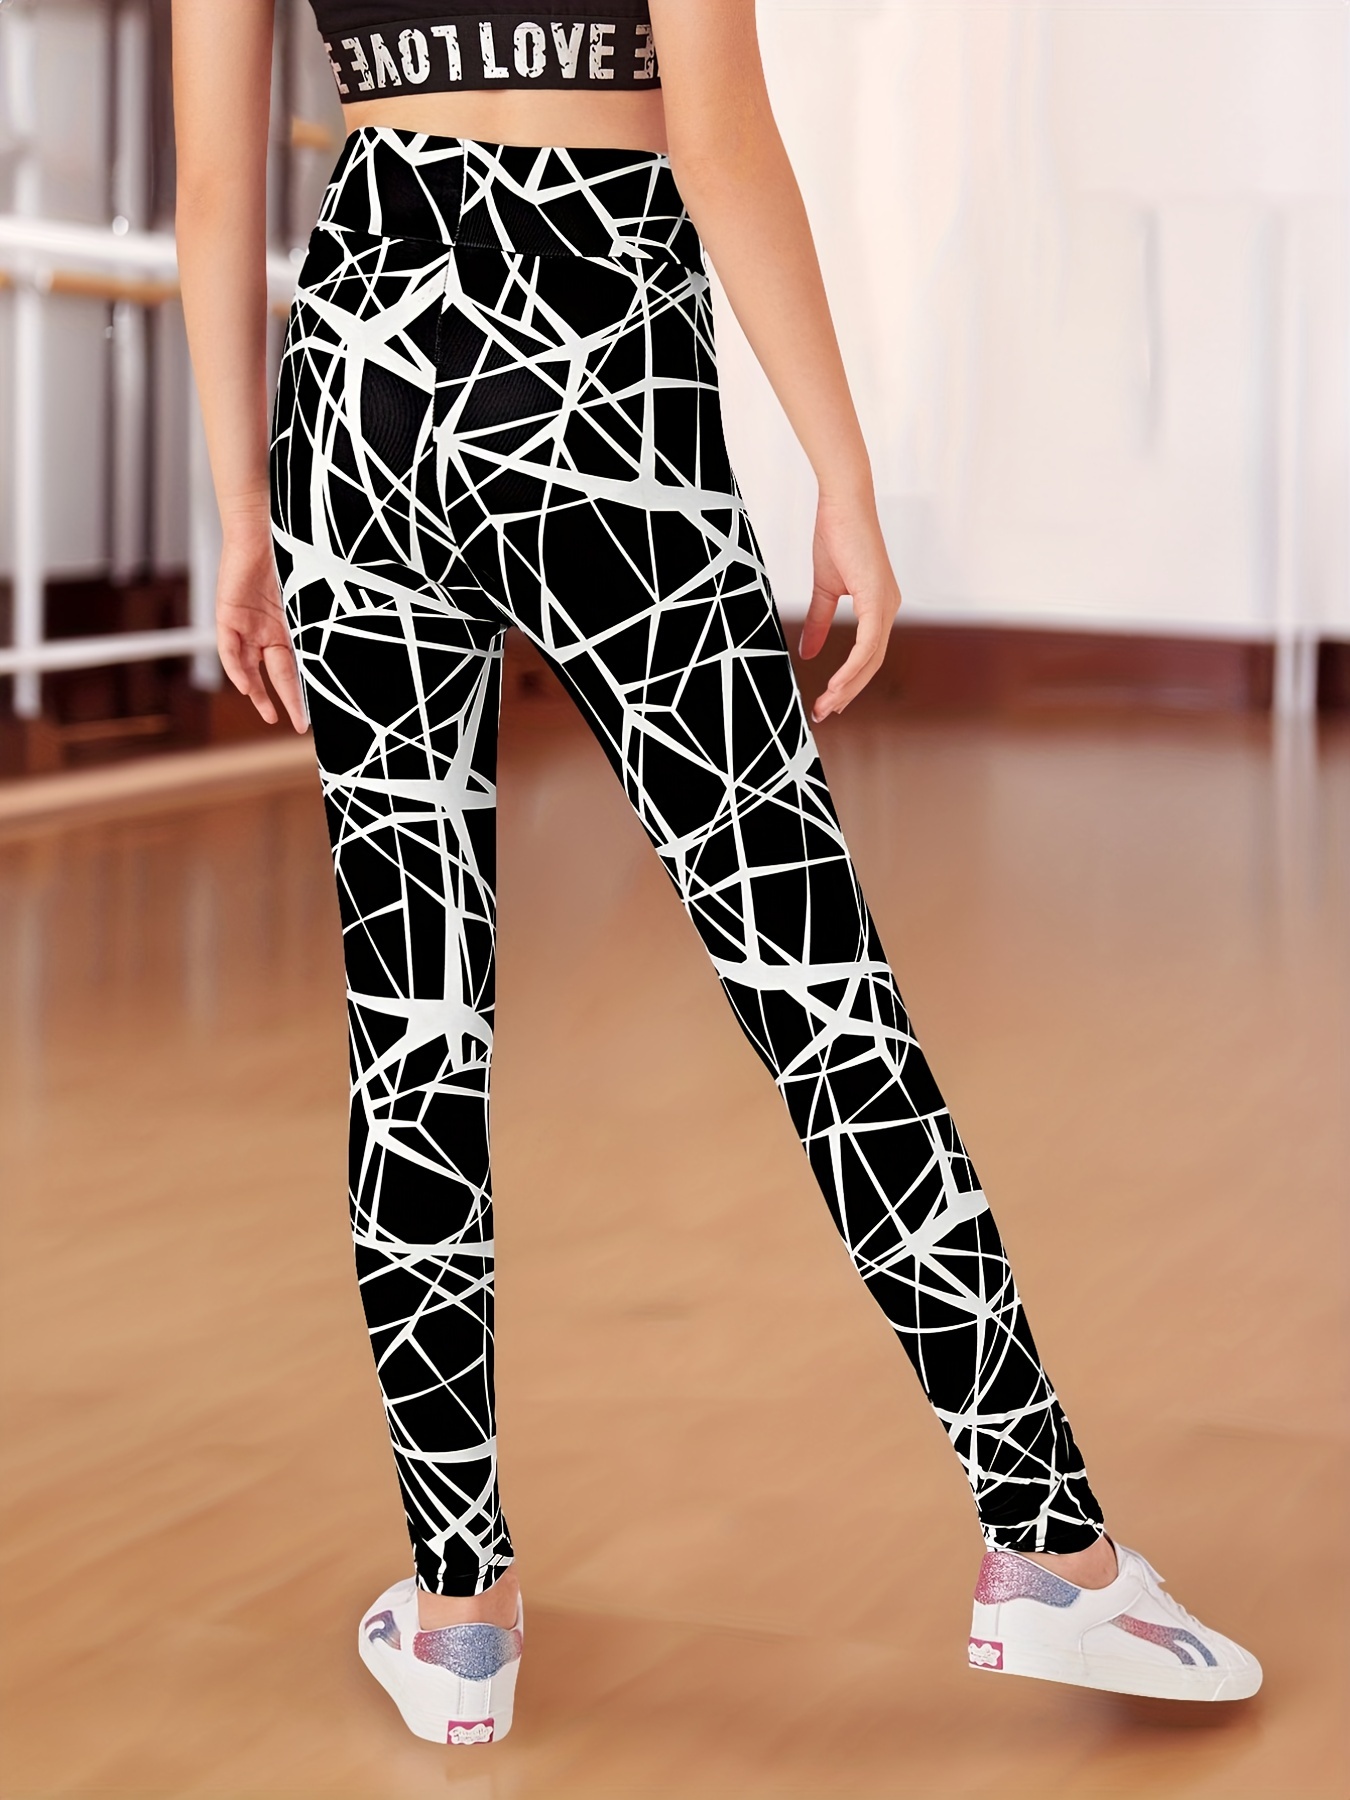 Black Geometric Leggings, Graphic Yoga Pants, High Waist Workout Leggings,  Exercise Pants With Geometric Print, Many Sizes 